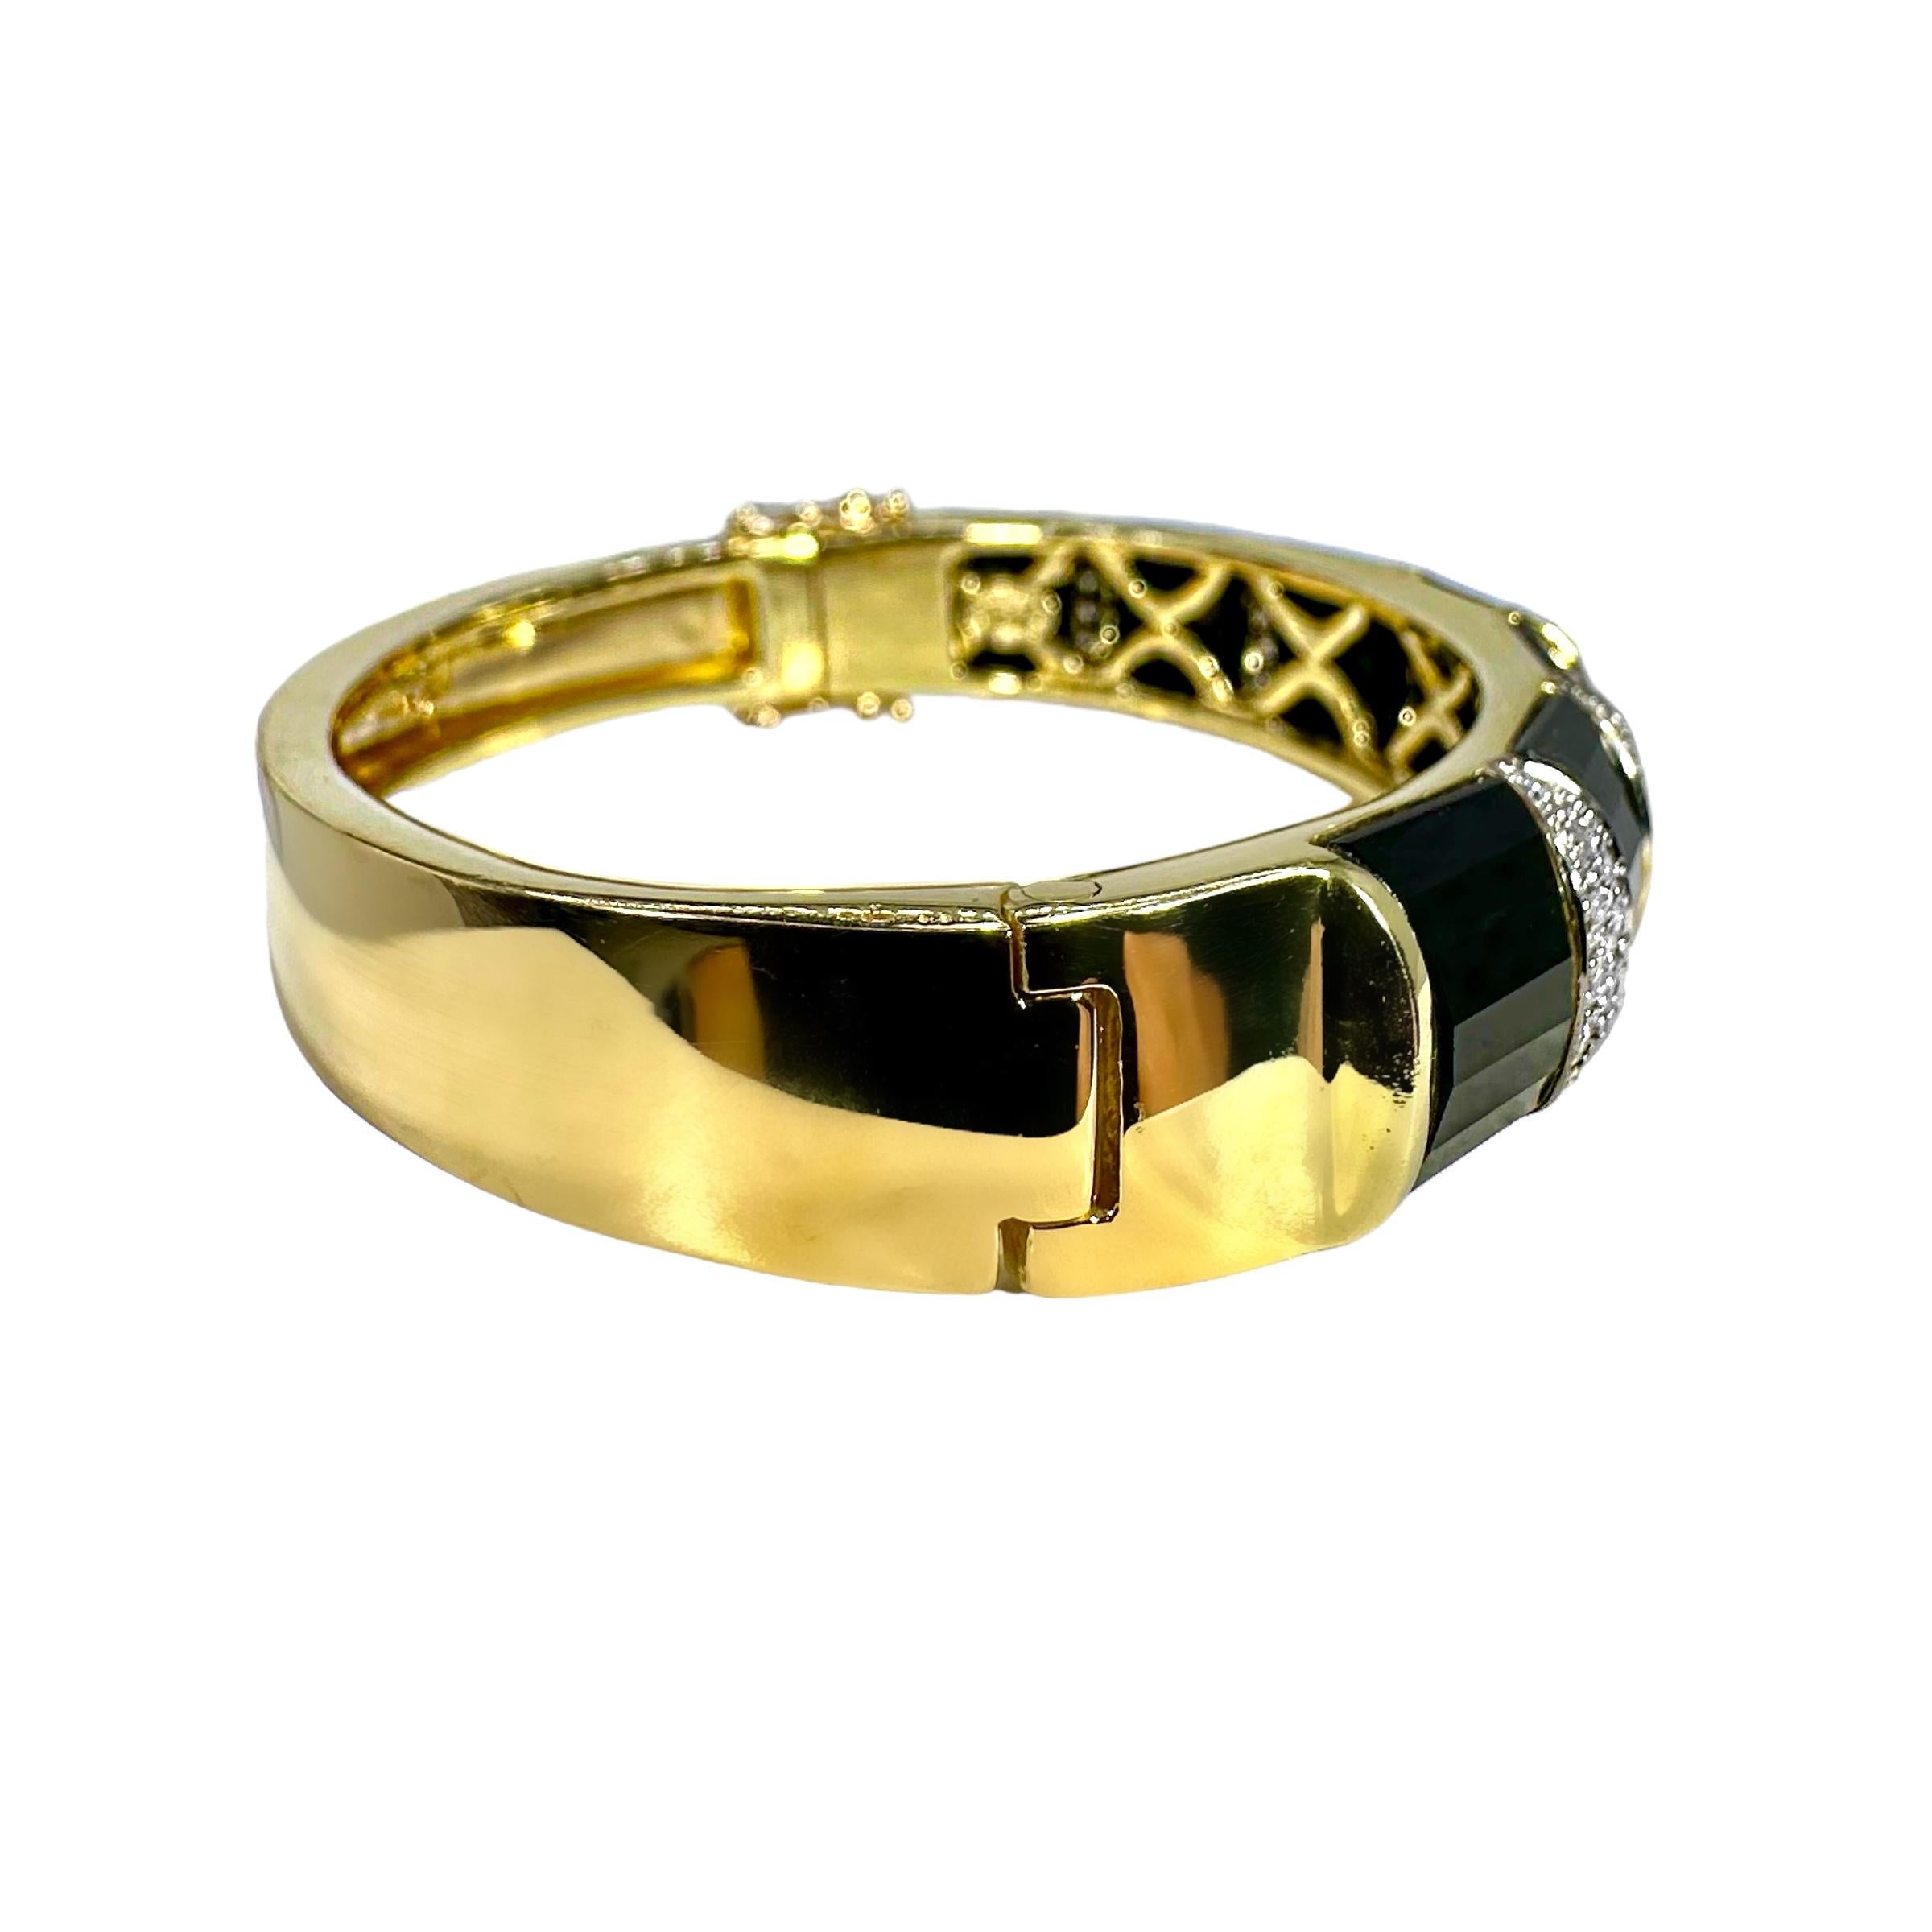 Tailored 18K Gold, Onyx and Diamond Bracelet by La Triomphe 1